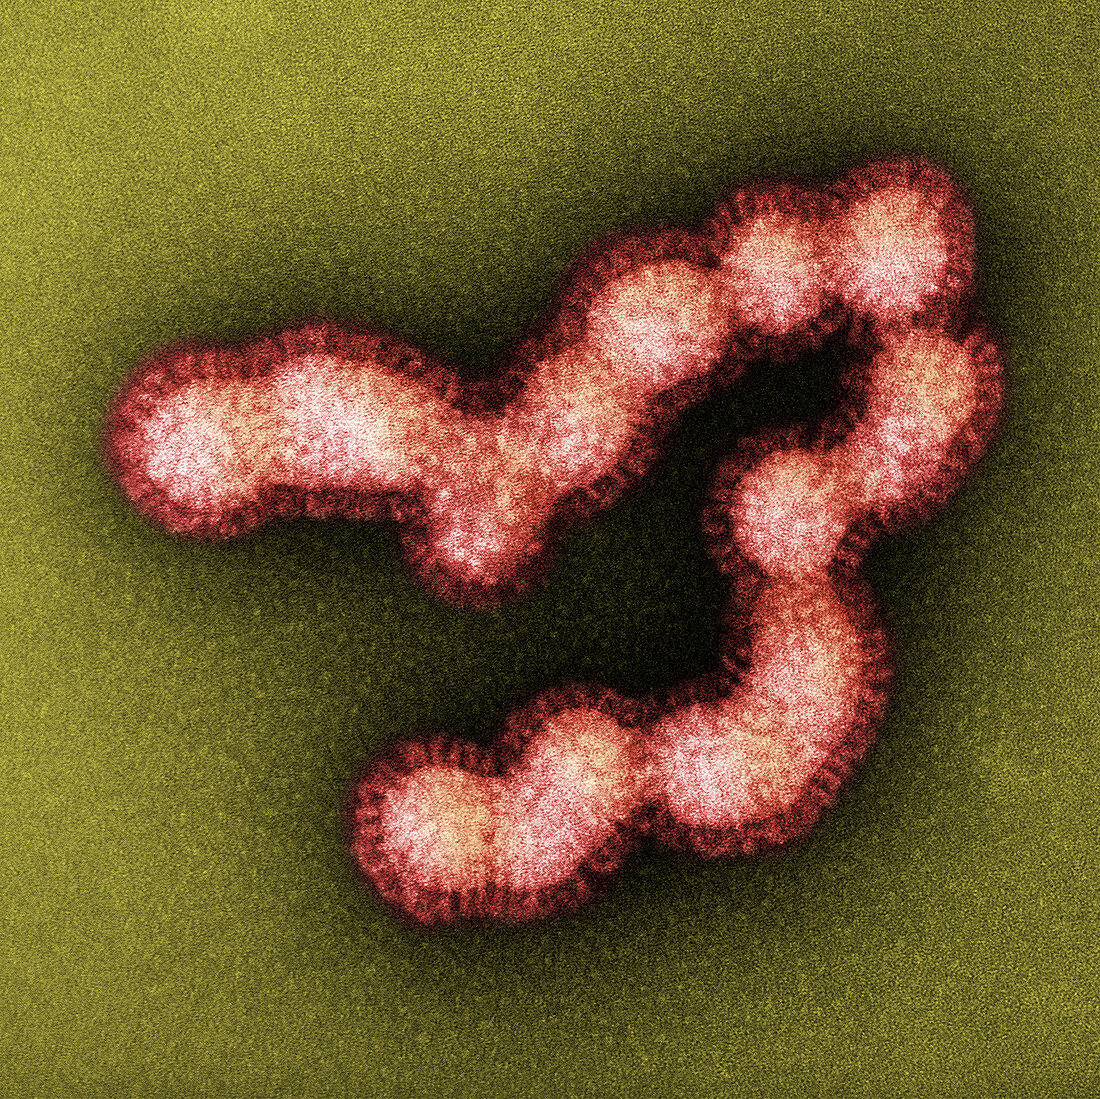 SW31, Swine Flu Strain Virus, TEM